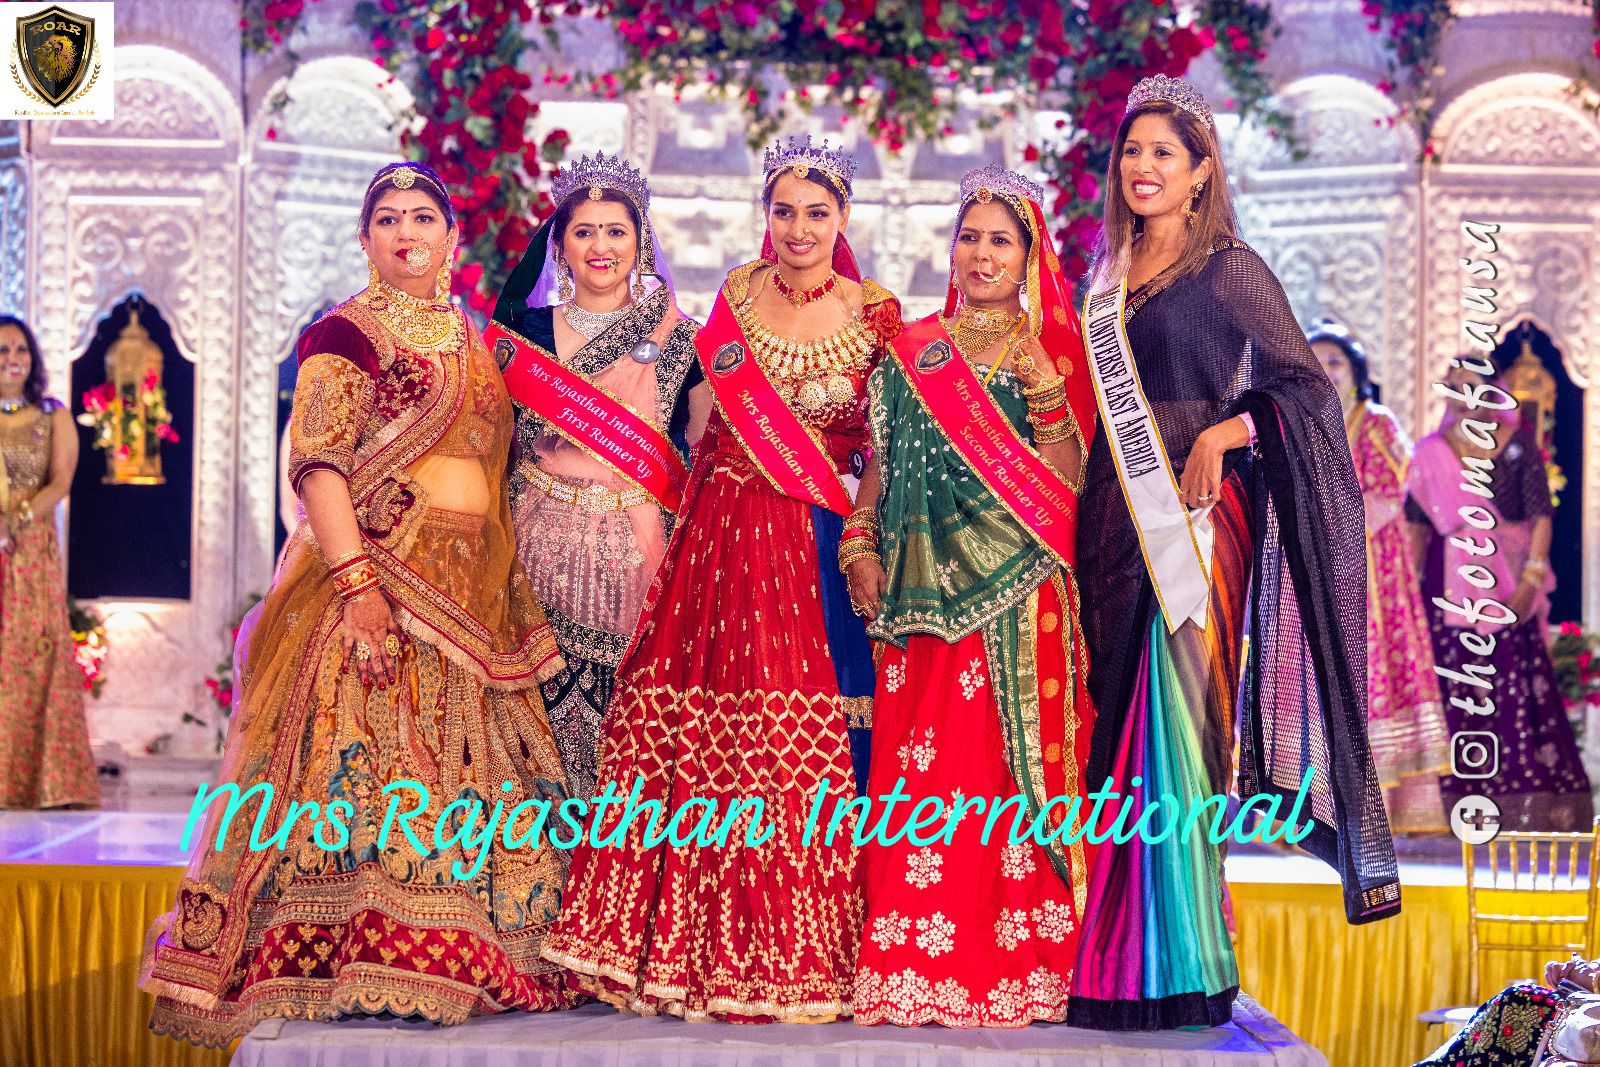 7th Annual Rajasthani Aabhushan Teej Mahotsav celebrated in a grand way